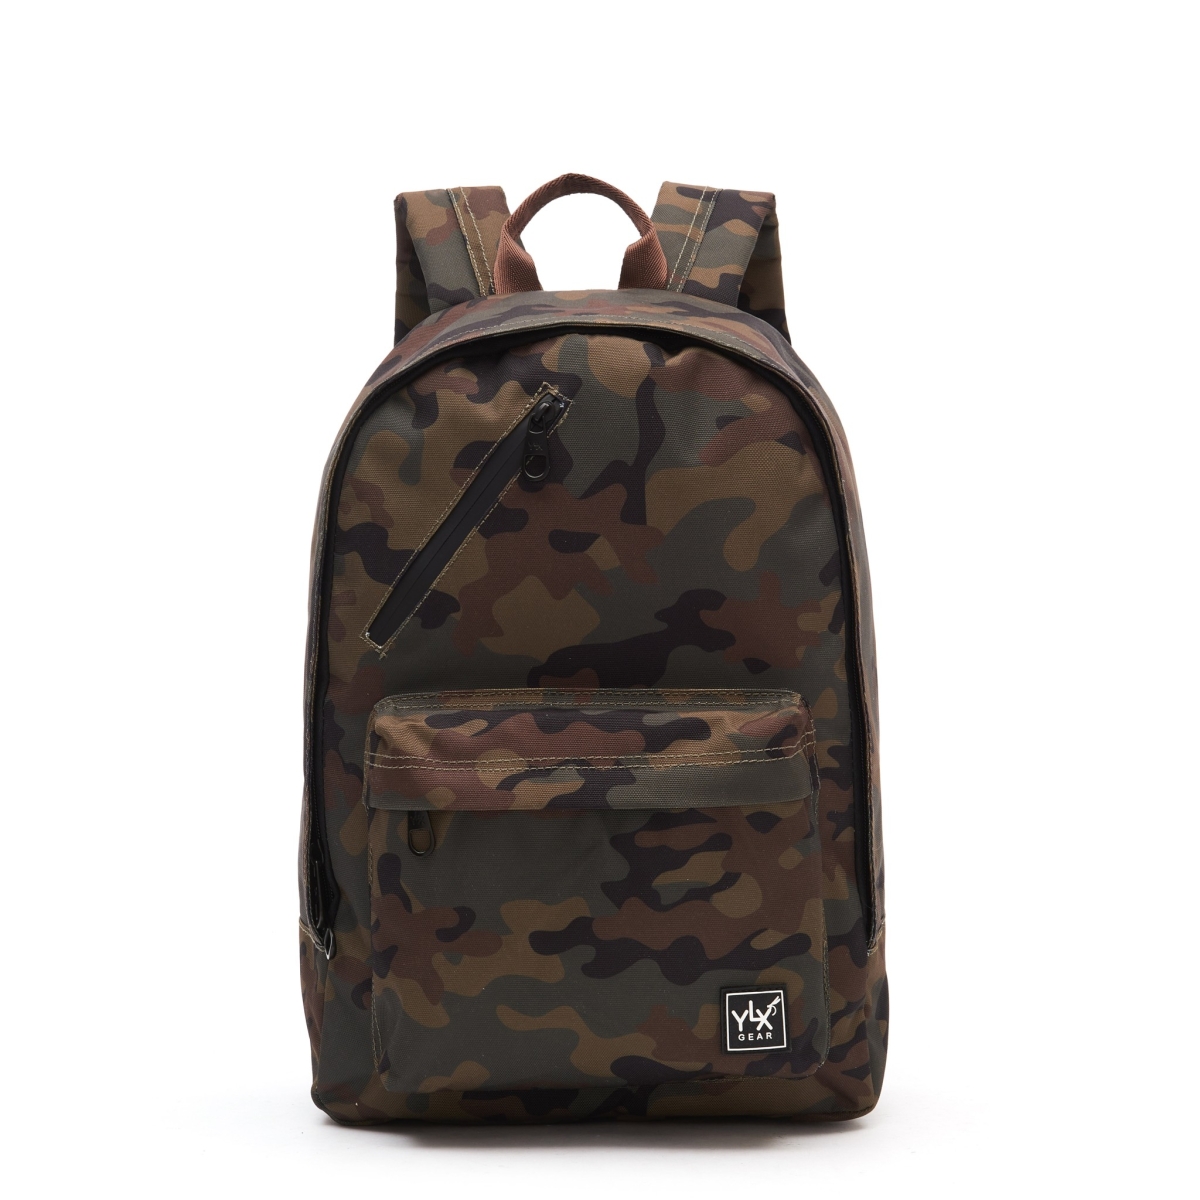 YLX Cornel Backpack | Camo Army